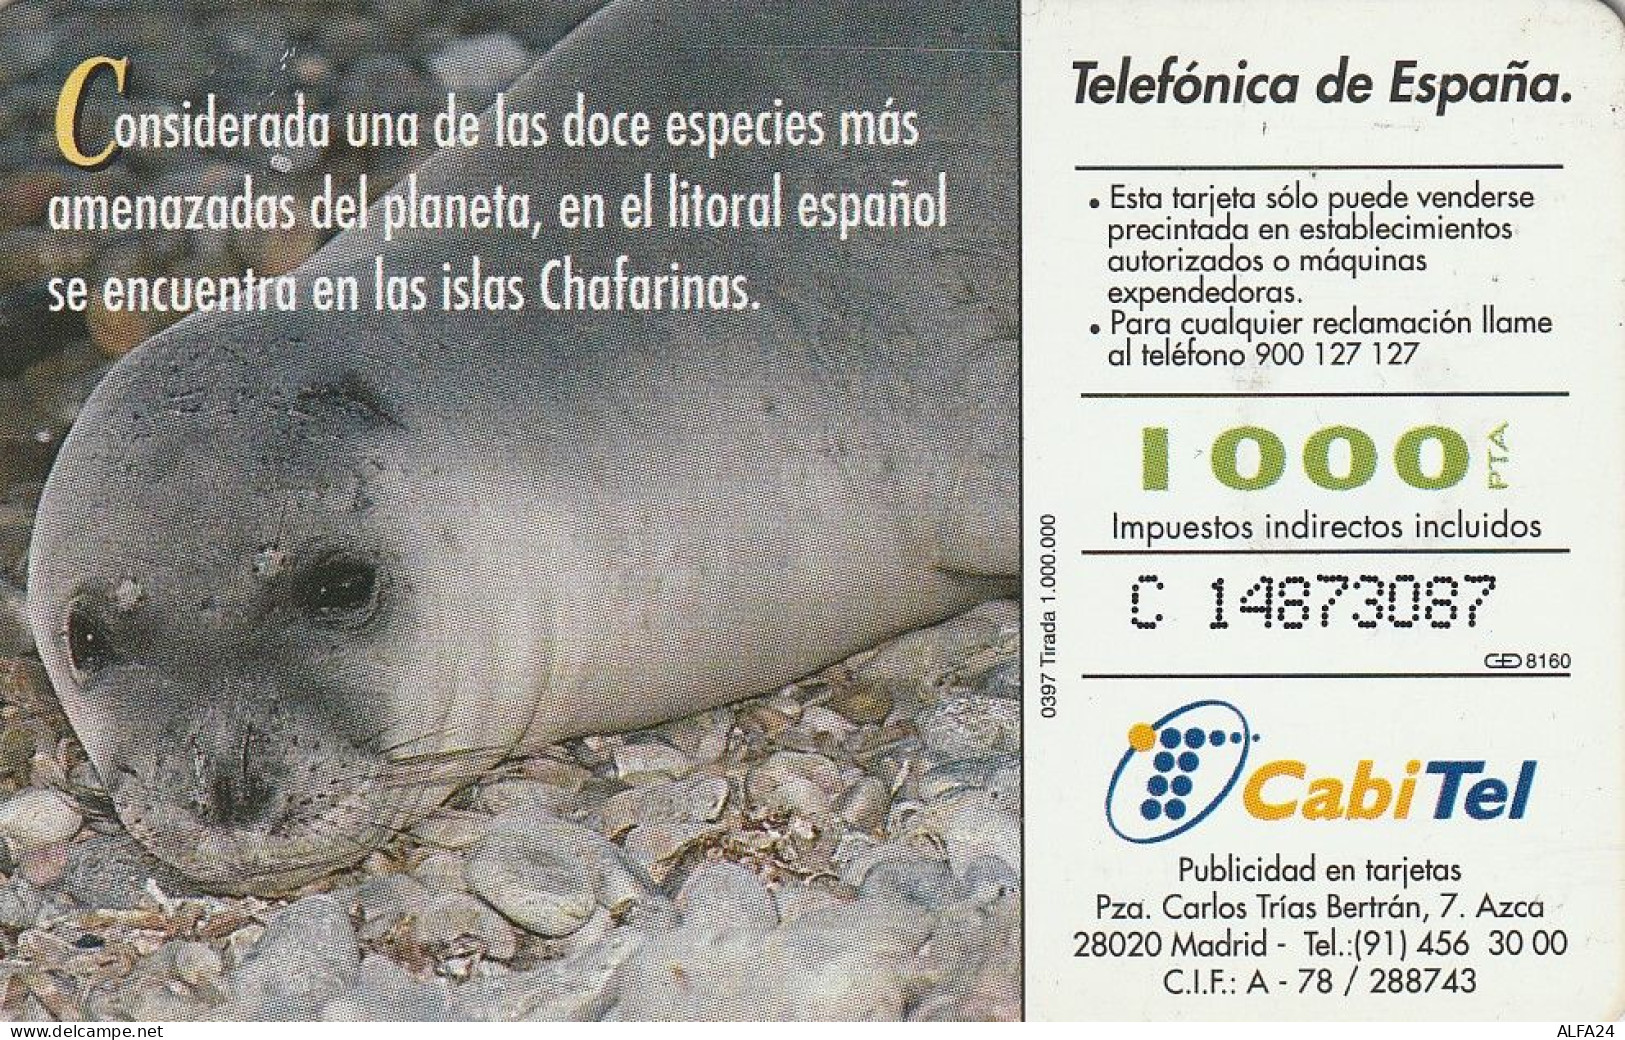 PHONE CARD SPAGNA FAUNA IBERICA  (CV6919 - Emissions Basiques